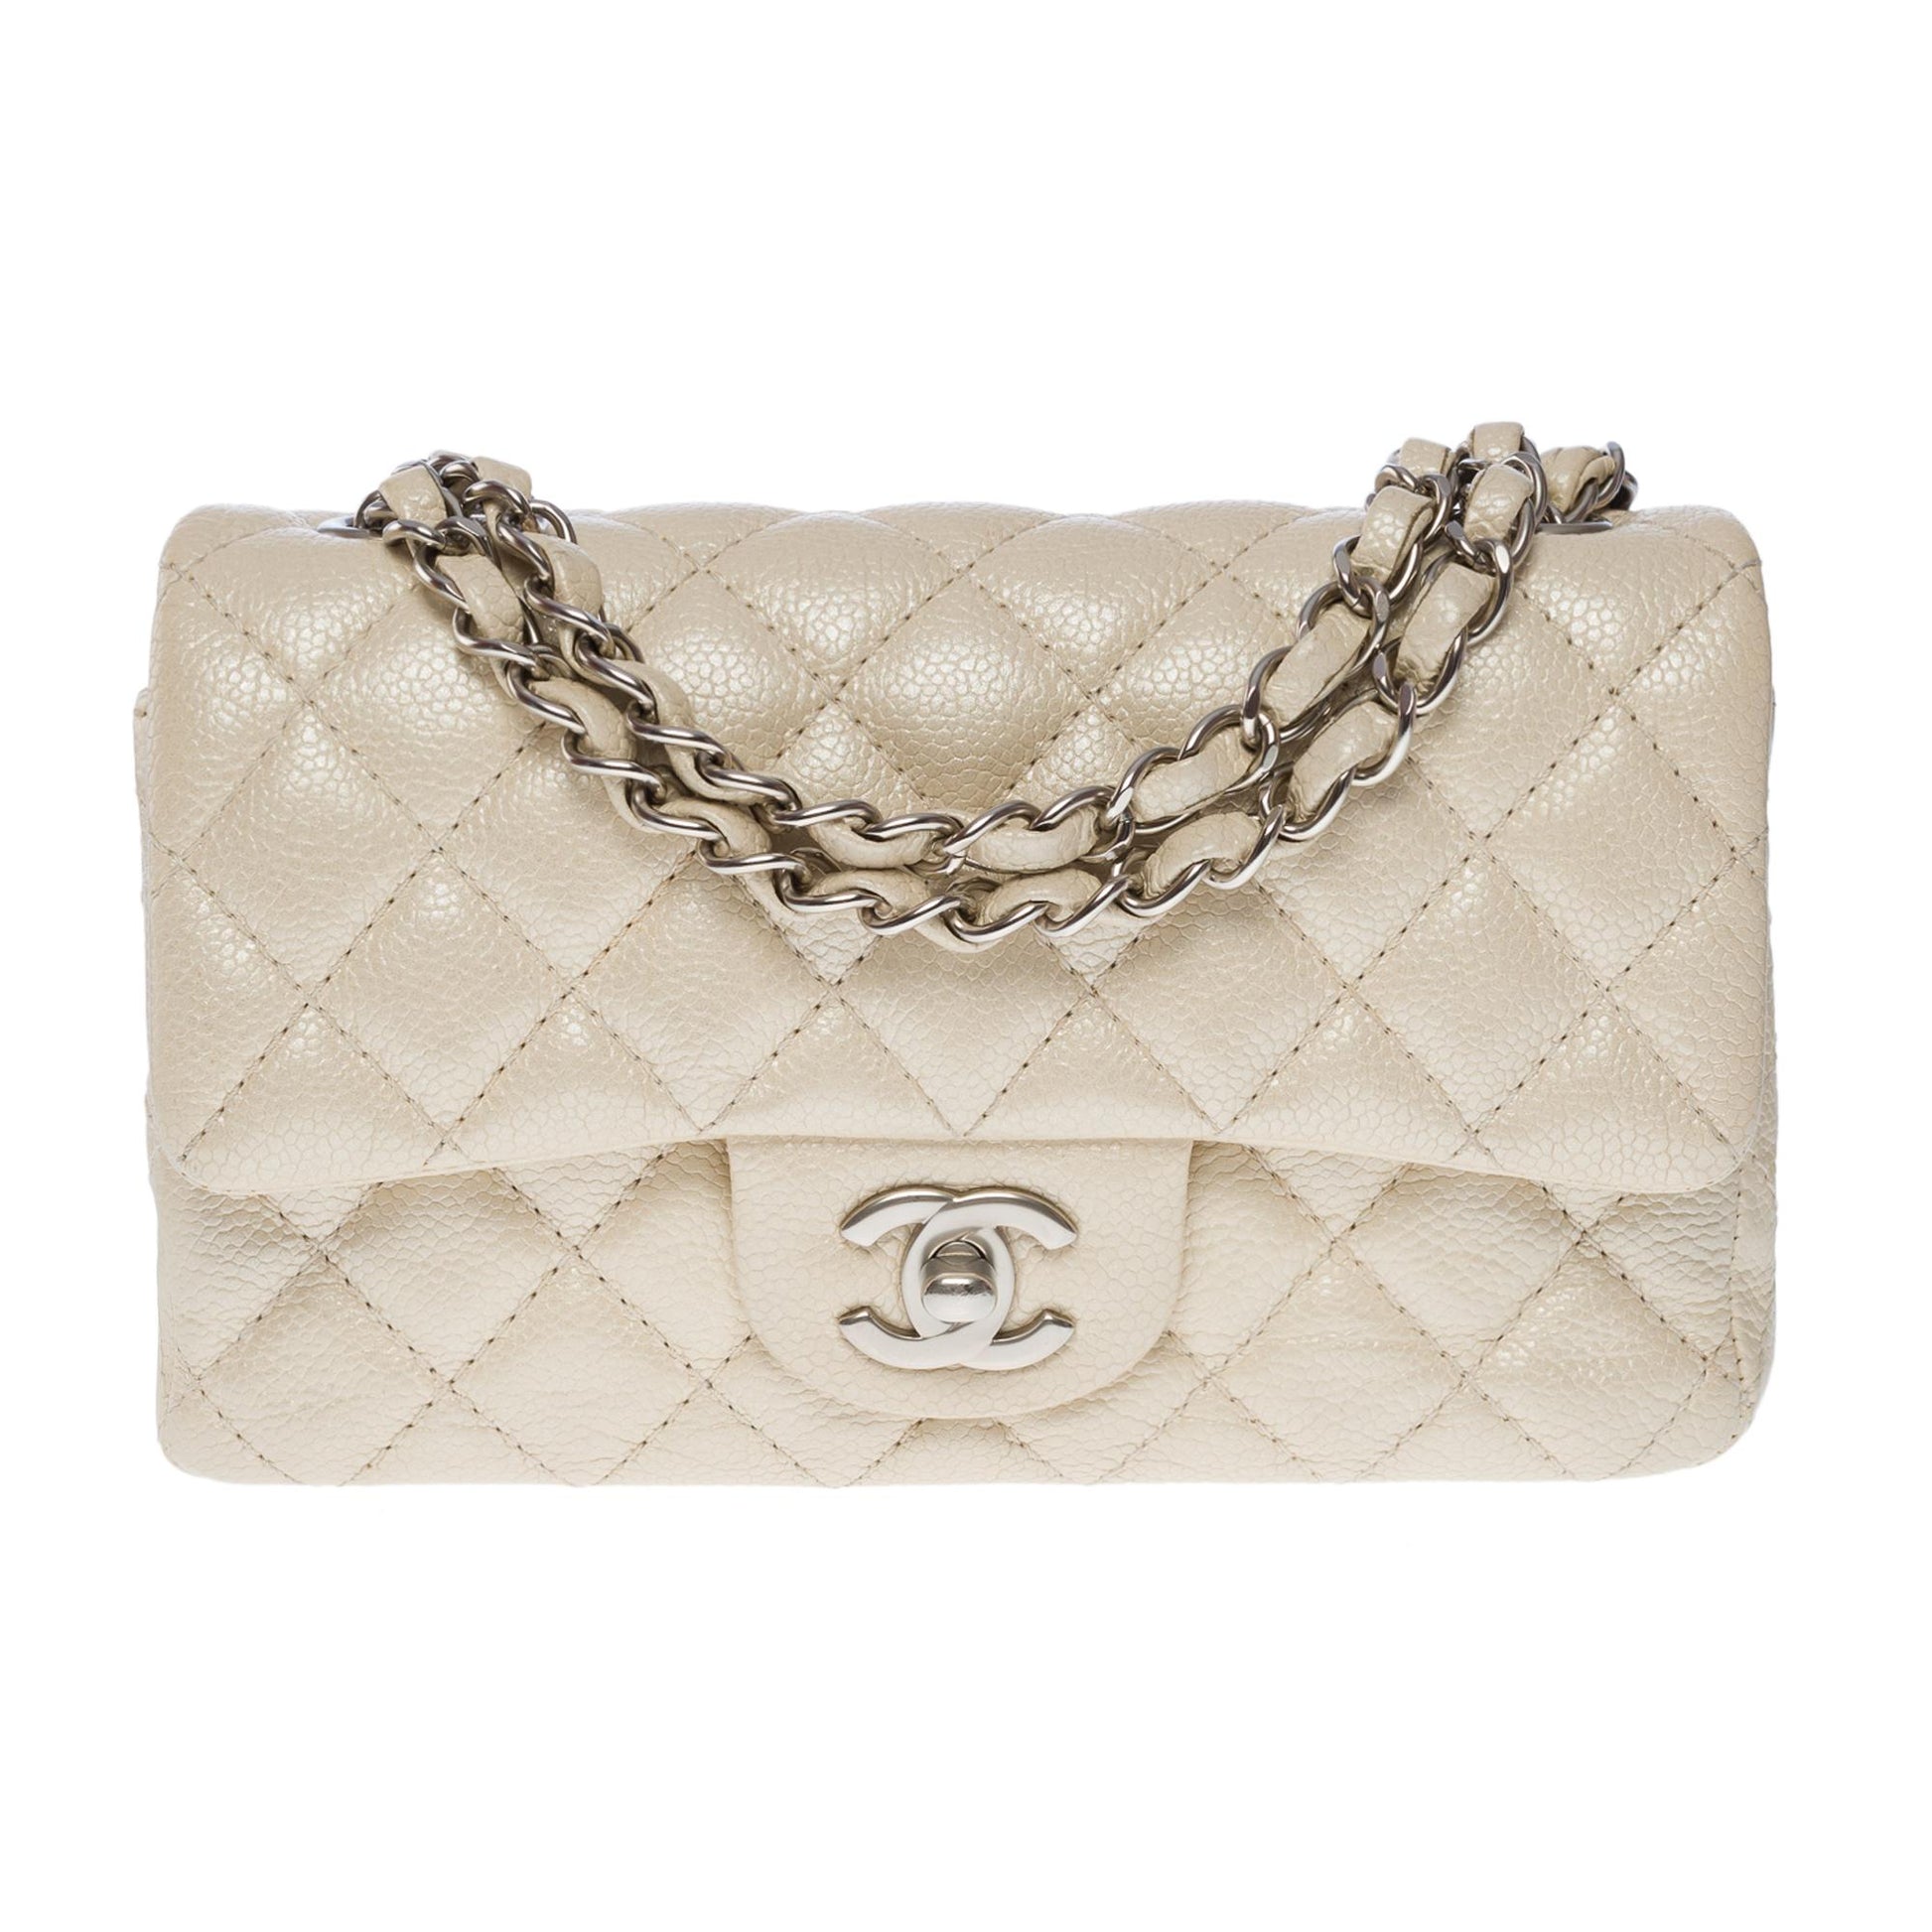 Is Chanel bag cheaper in Paris? - Quora